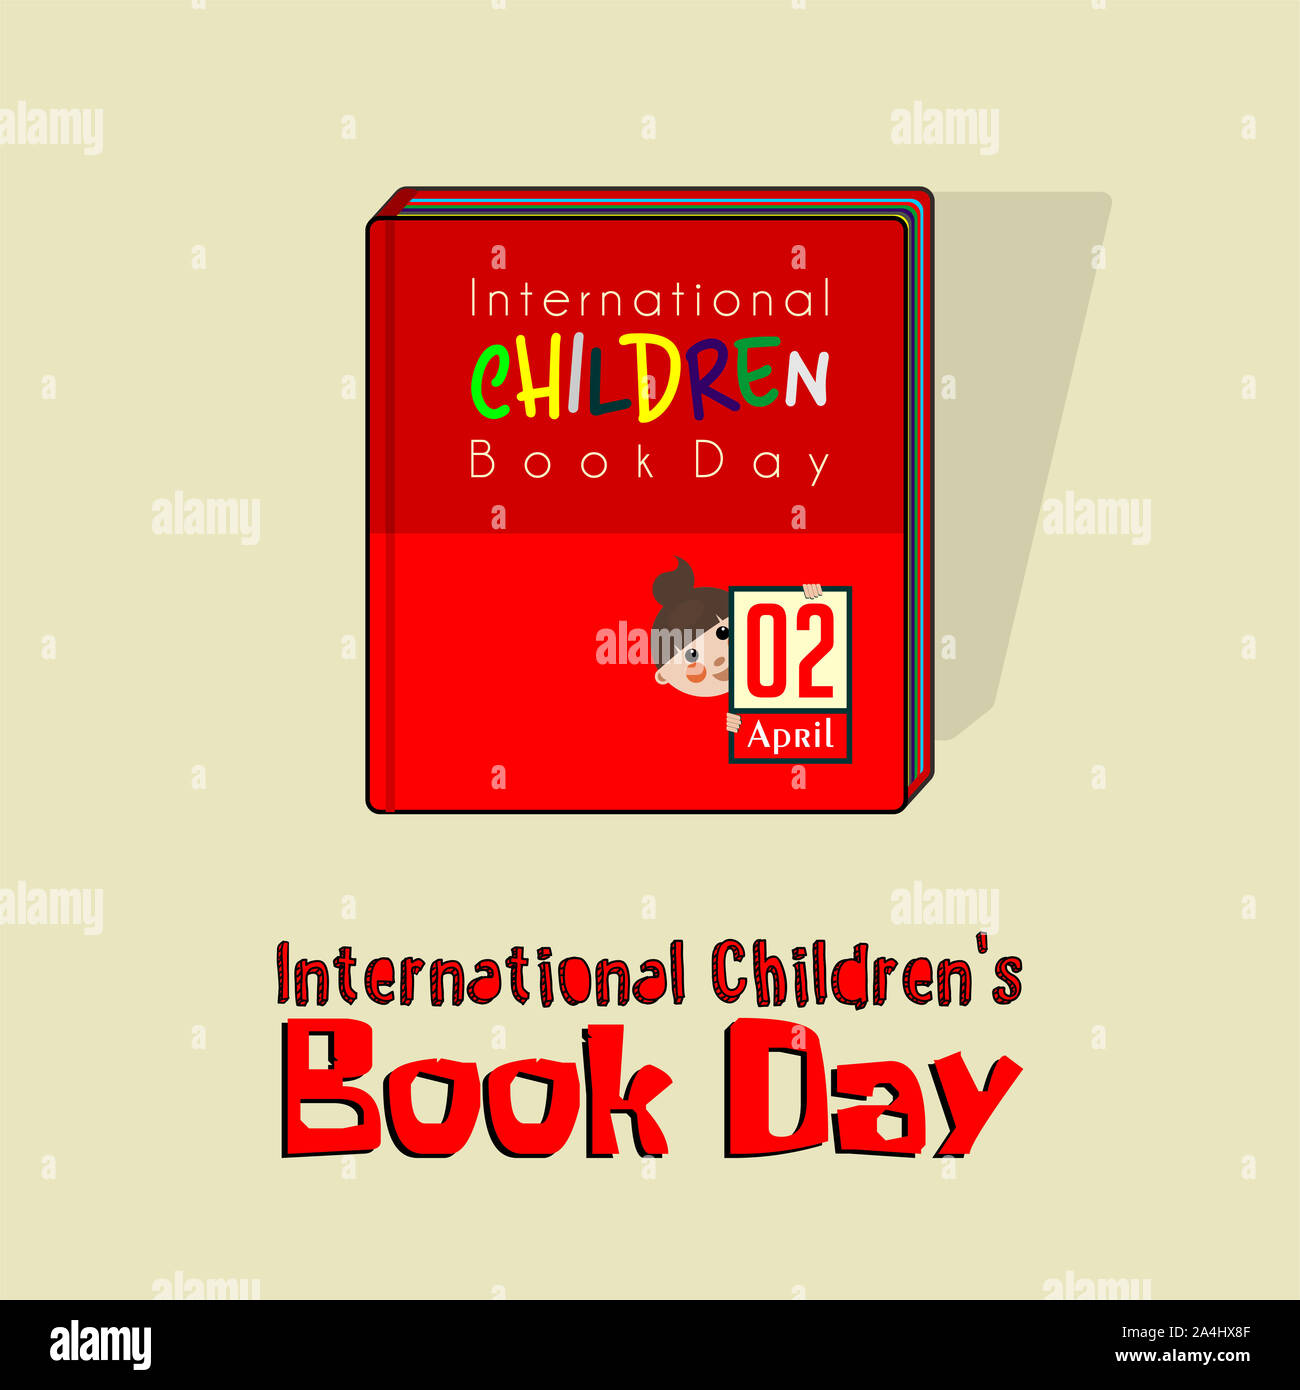 International Children's Book Day with red book, children's book vector cartoon design Stock Photo